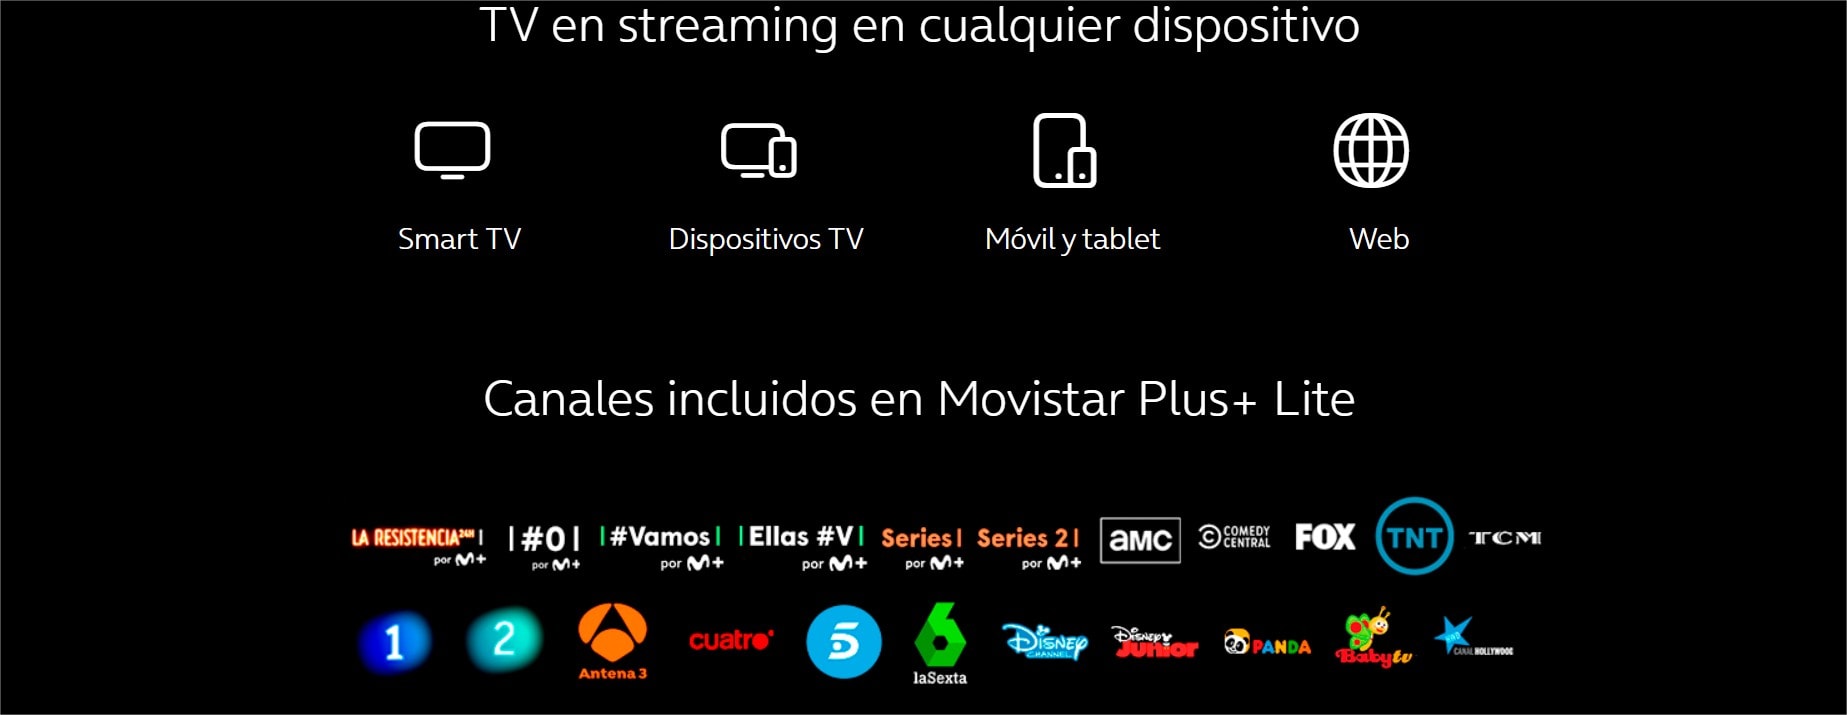 Movistar Plus+ Lite content